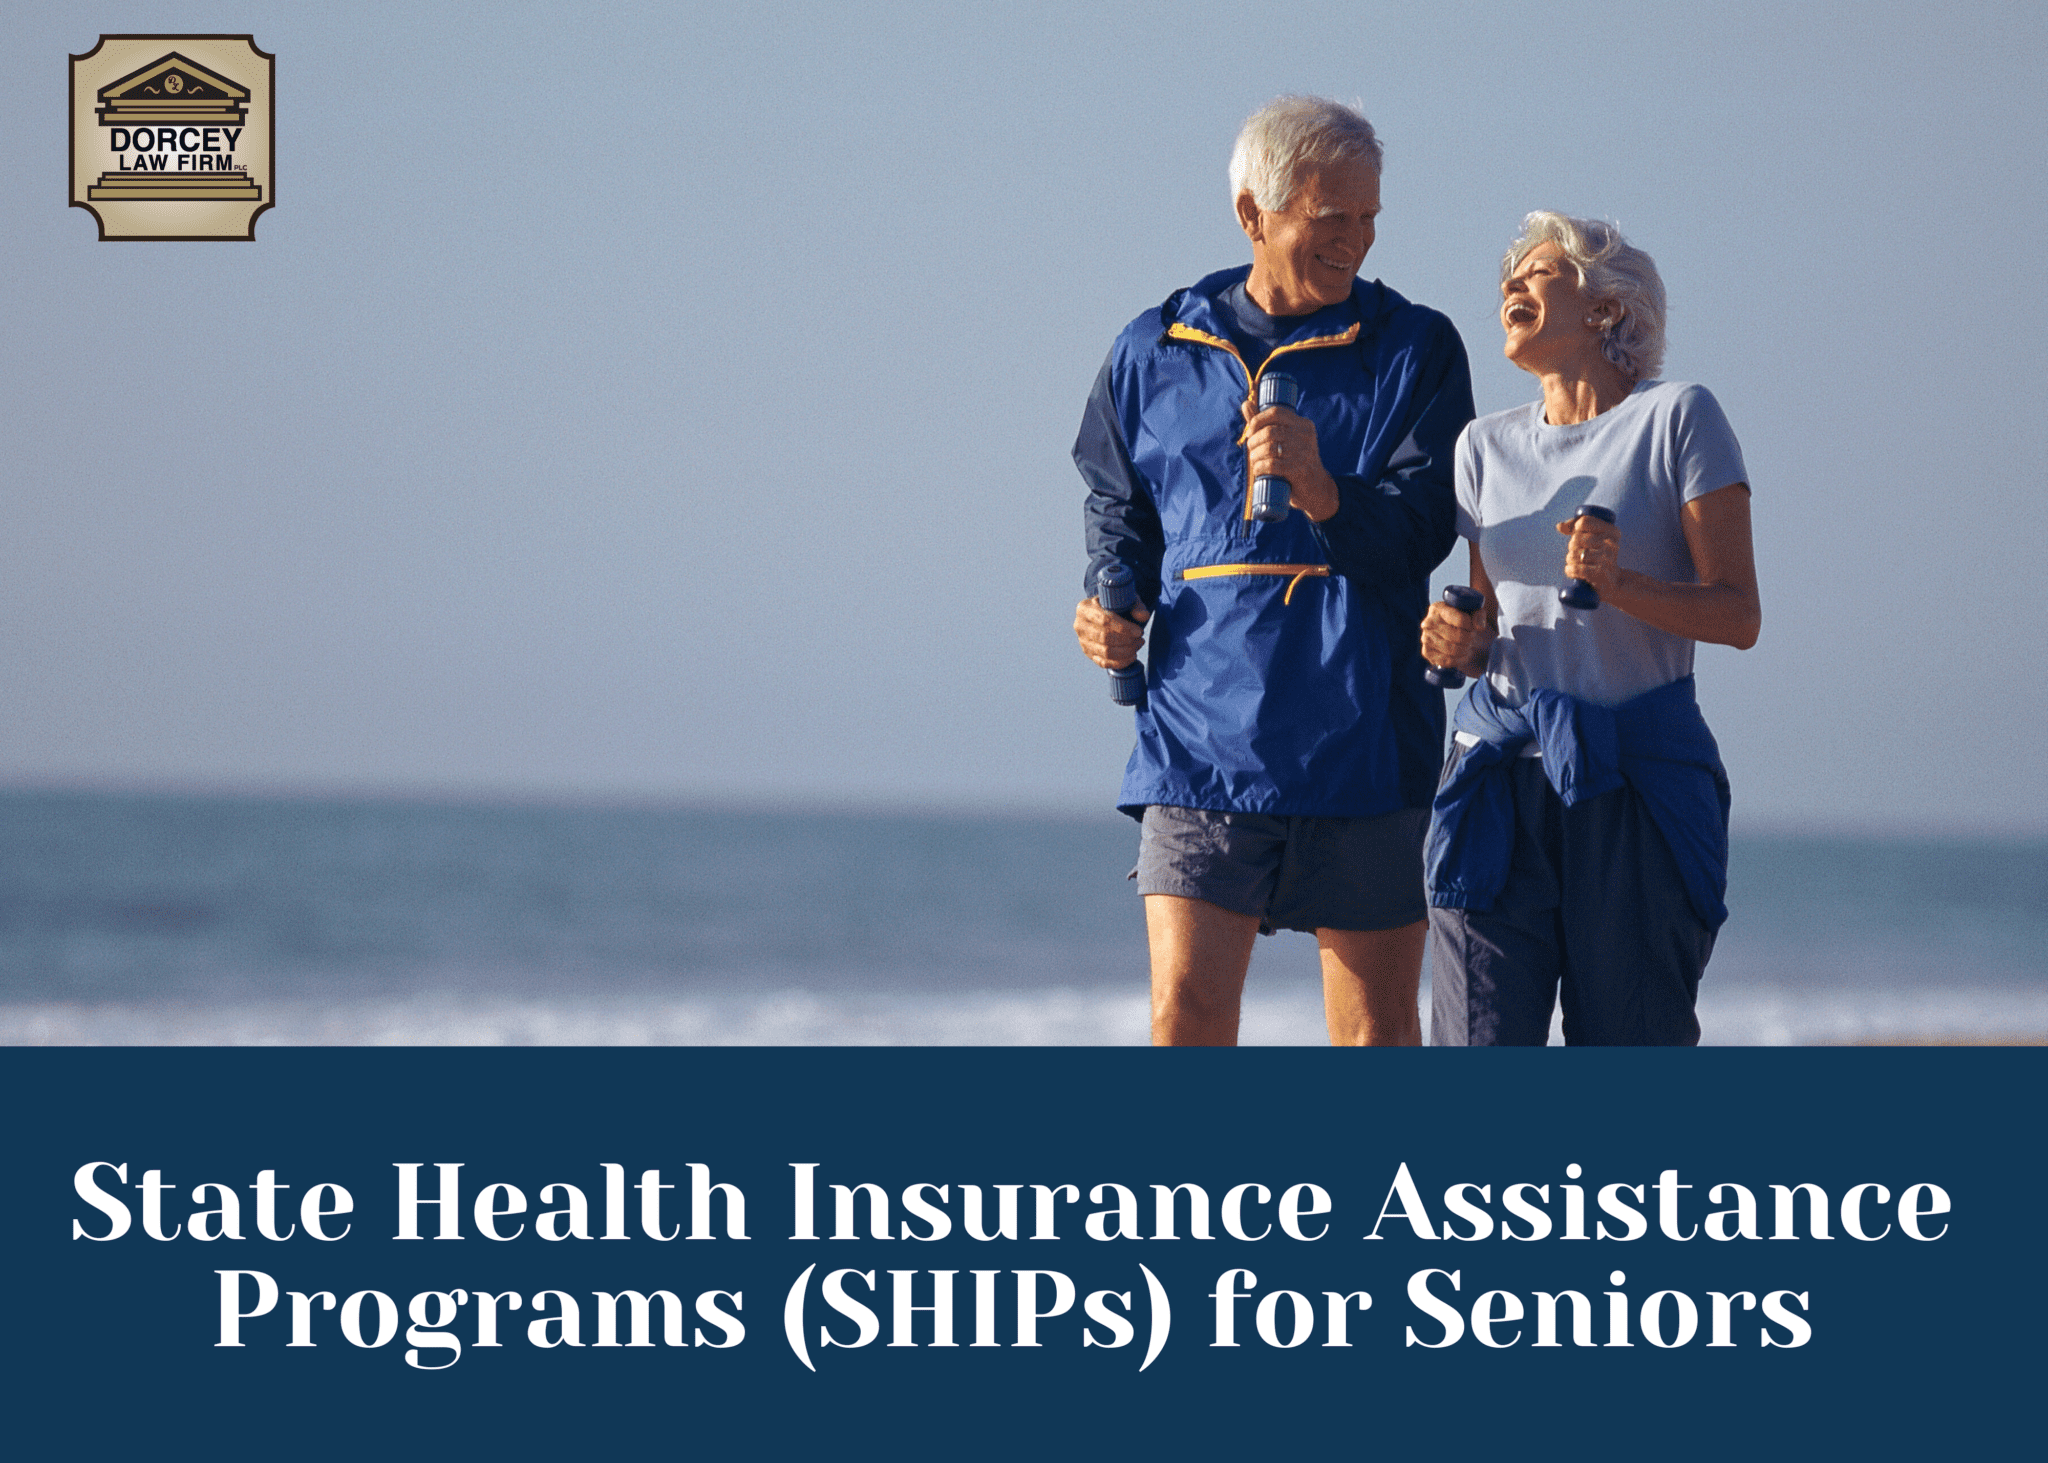 State Health Insurance Assistance Programs (Ships) for Seniors